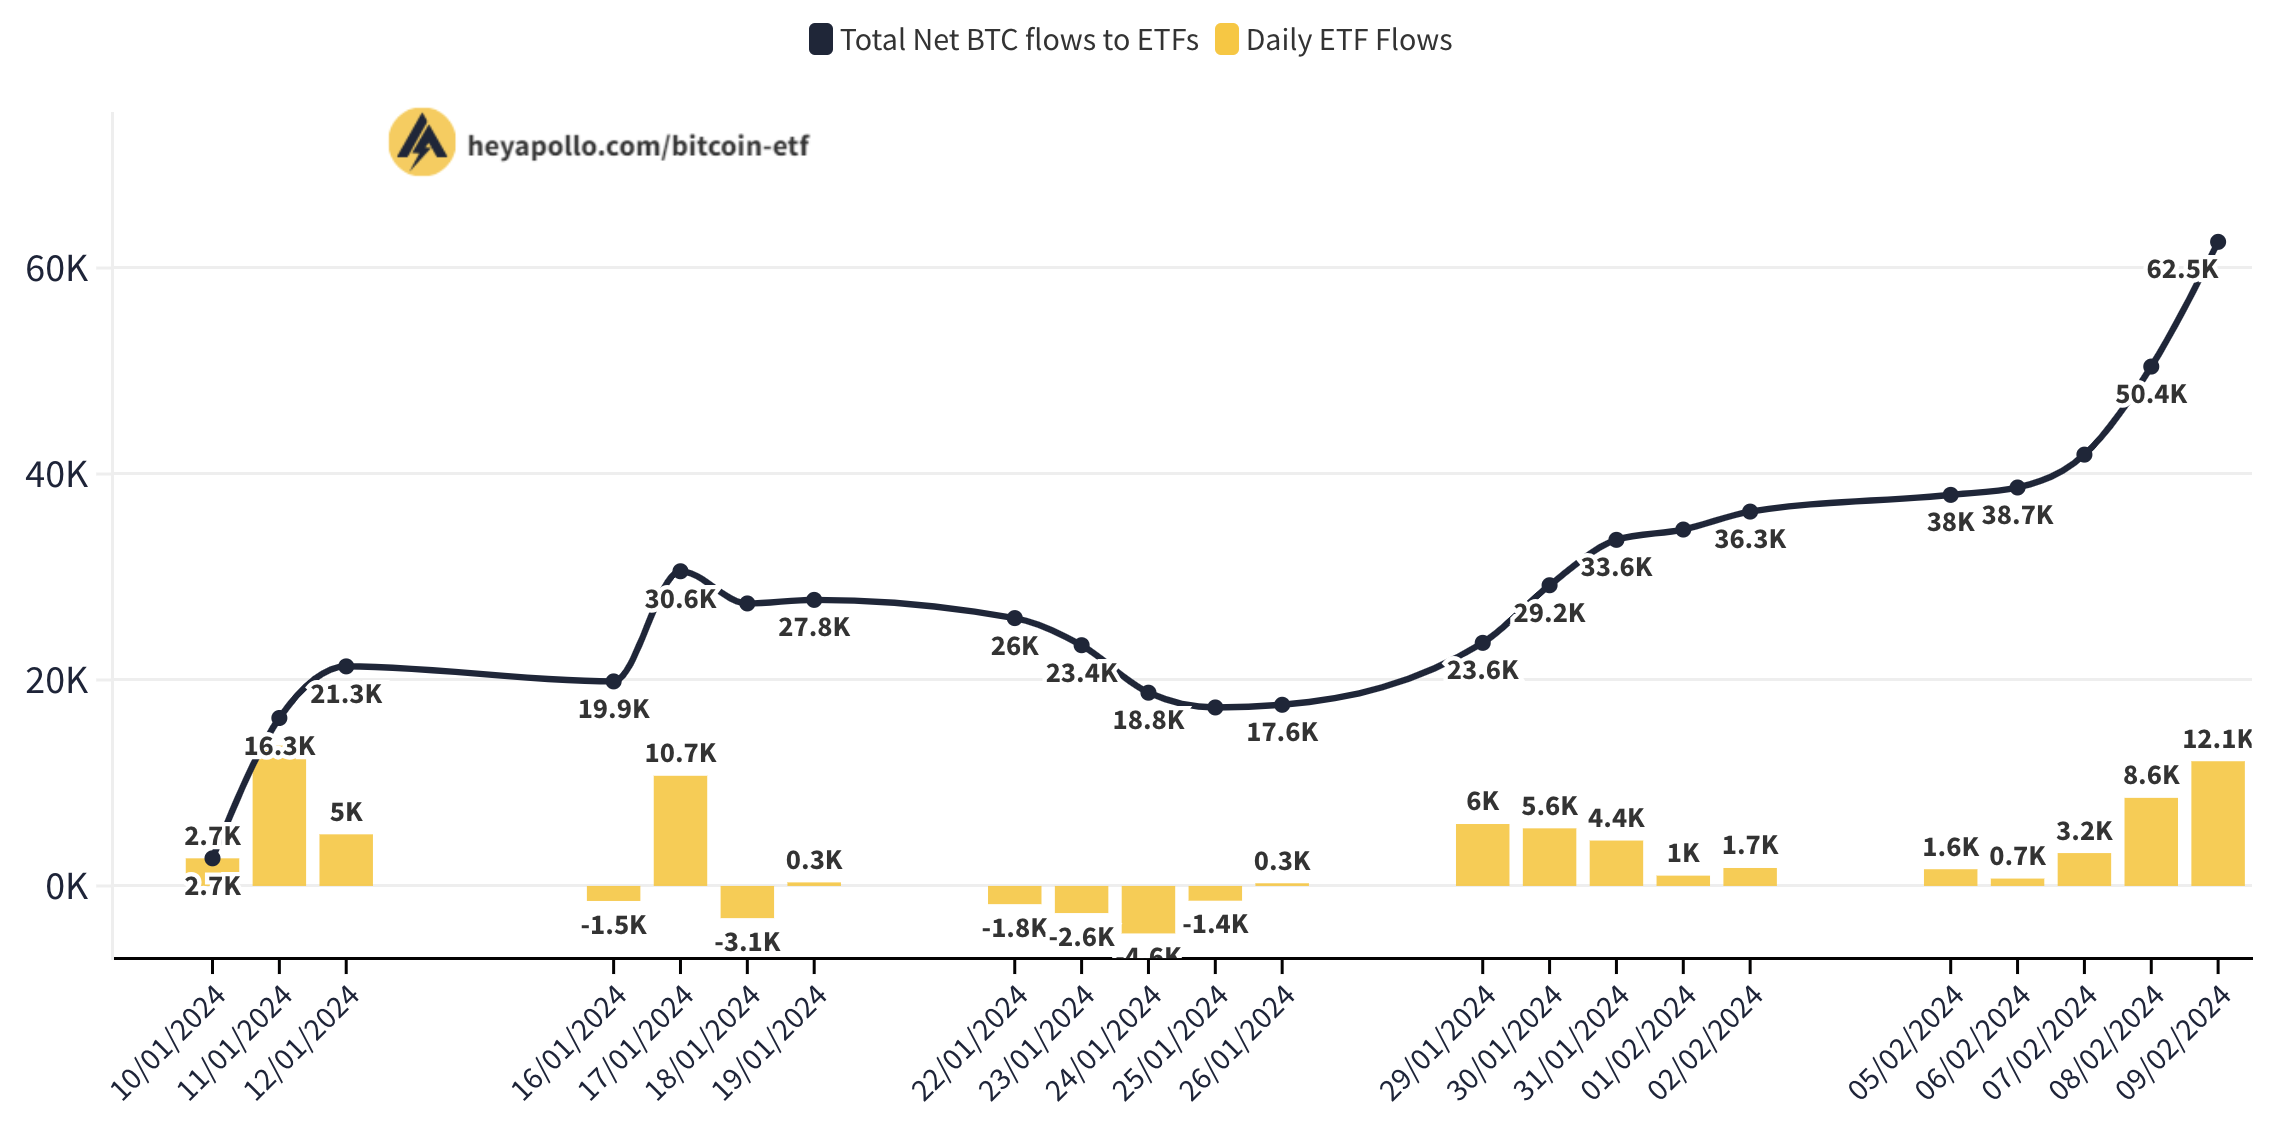 ETF flows in BTC